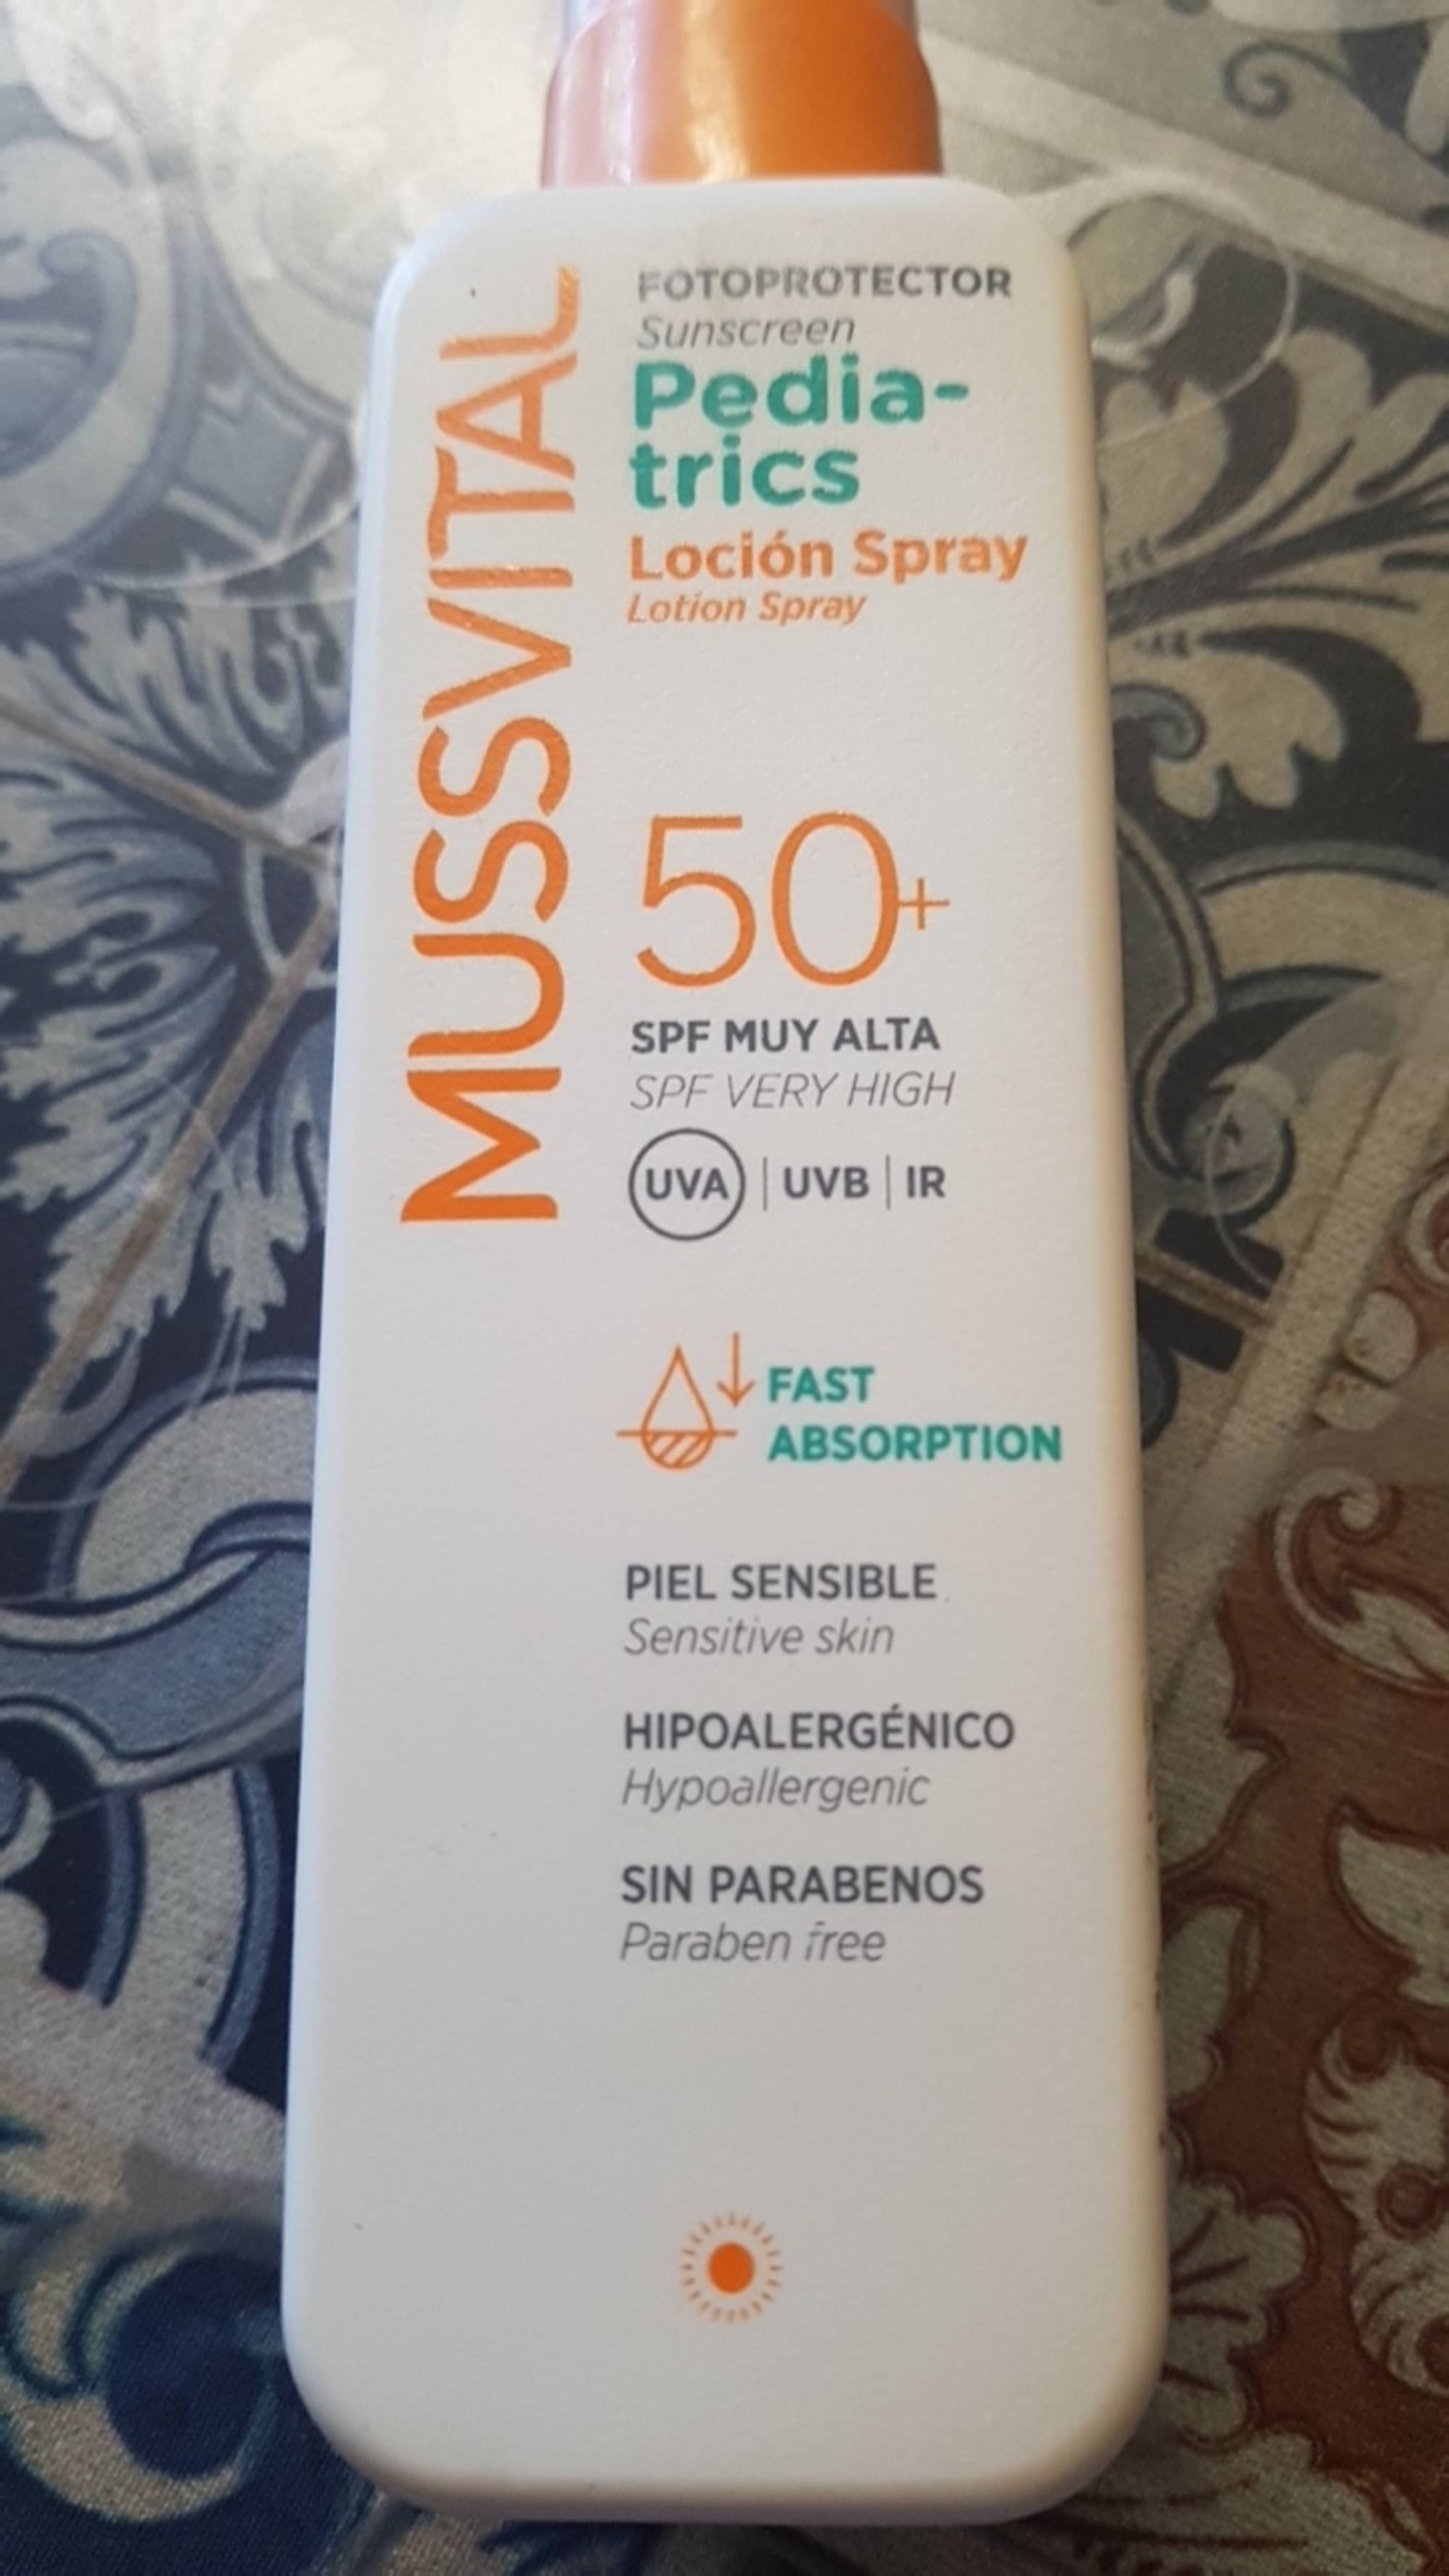 MUSSVITAL - Fotoprotector pediatrics - Lotion spray spf 50+